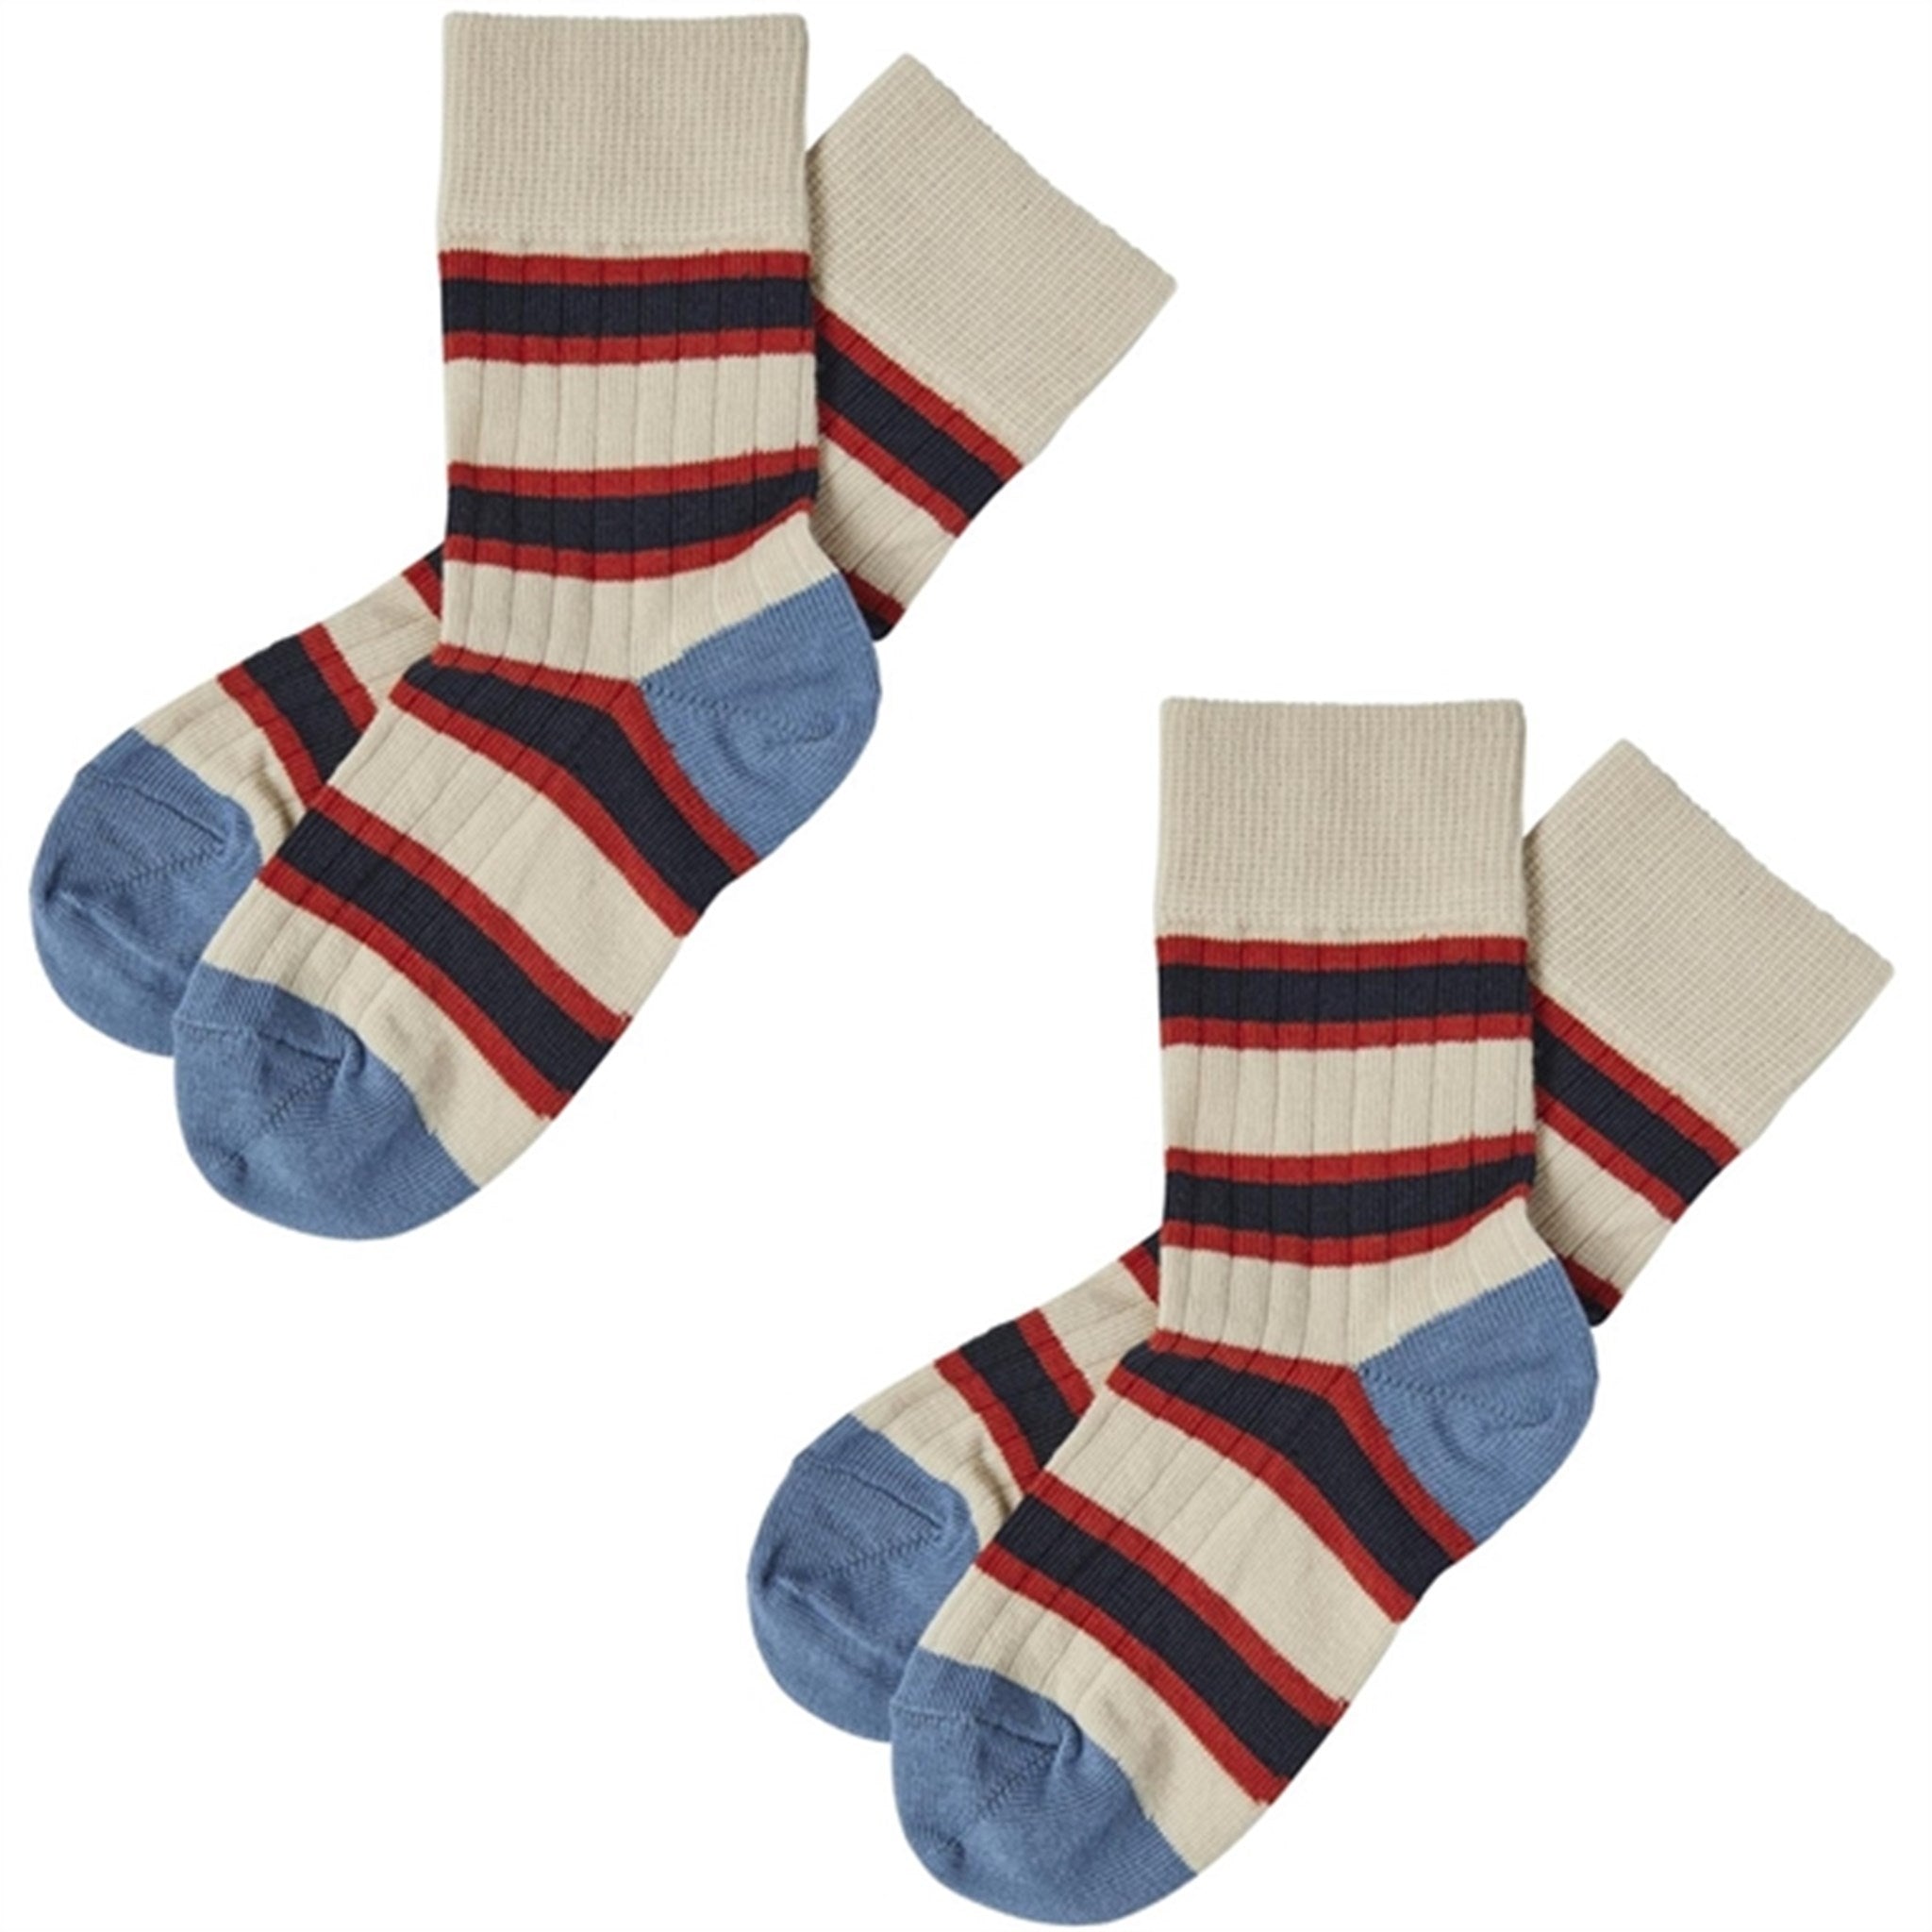 FUB Azure/Crimson Red 2-pack Two Tone Striped Socks